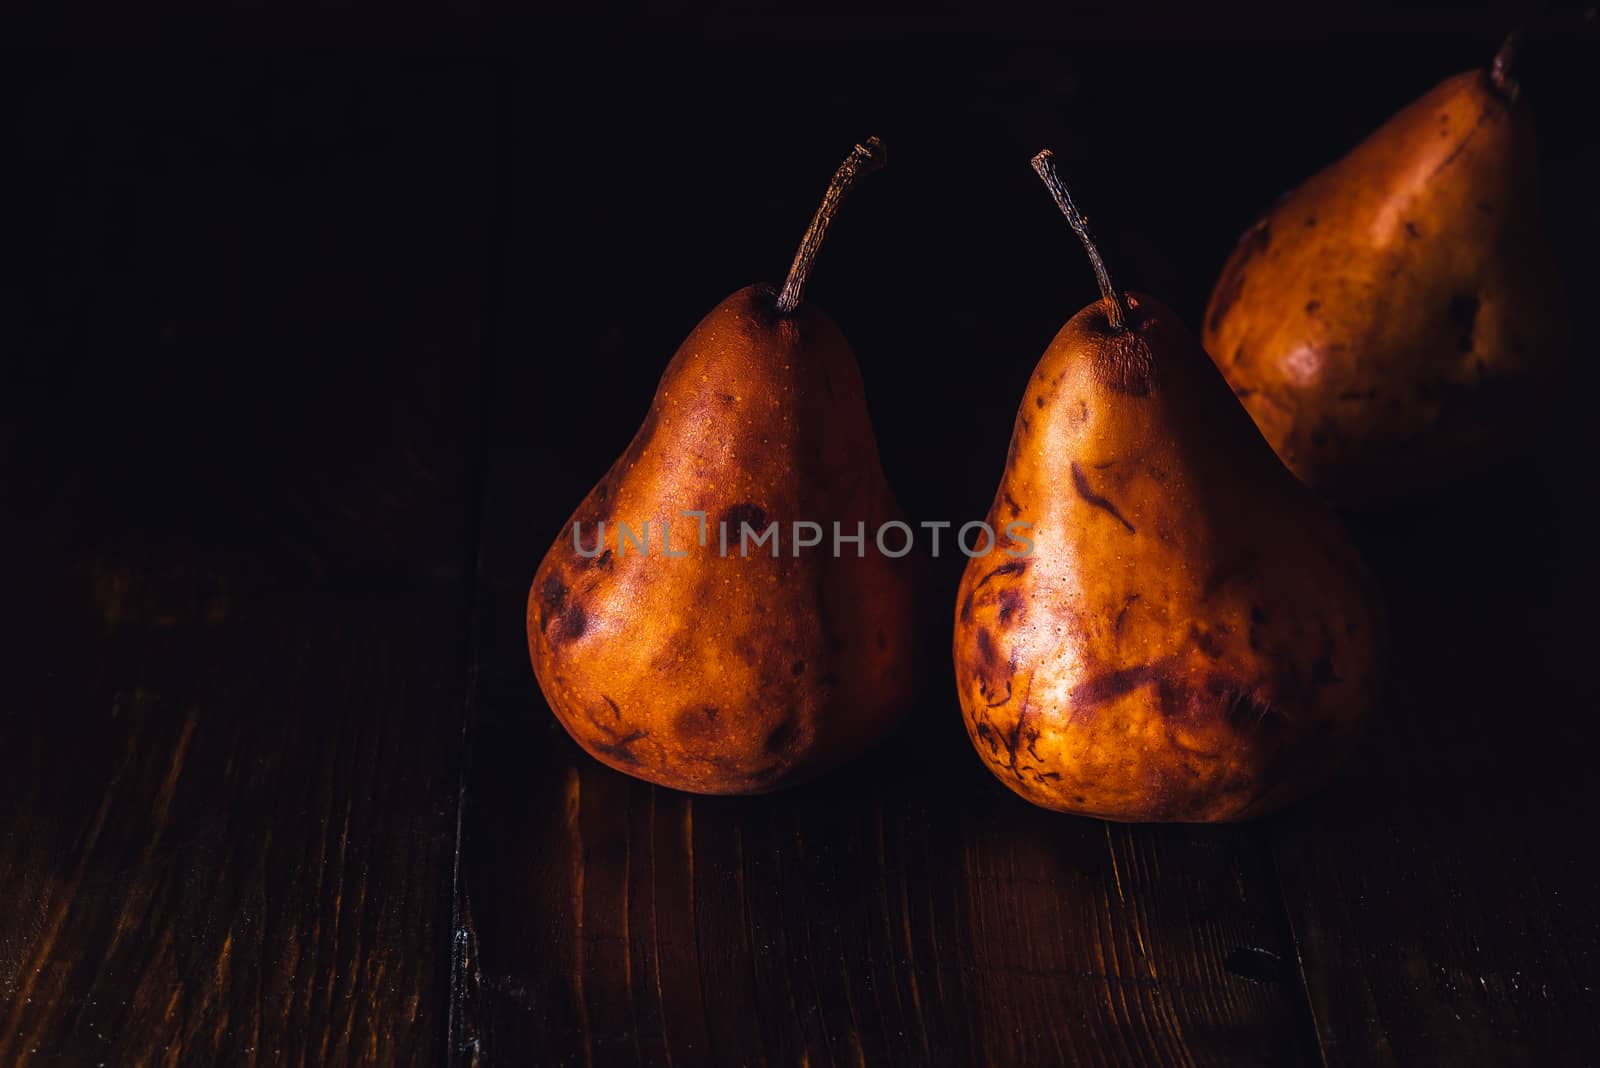 Golden Pears on Wooden Table by Seva_blsv